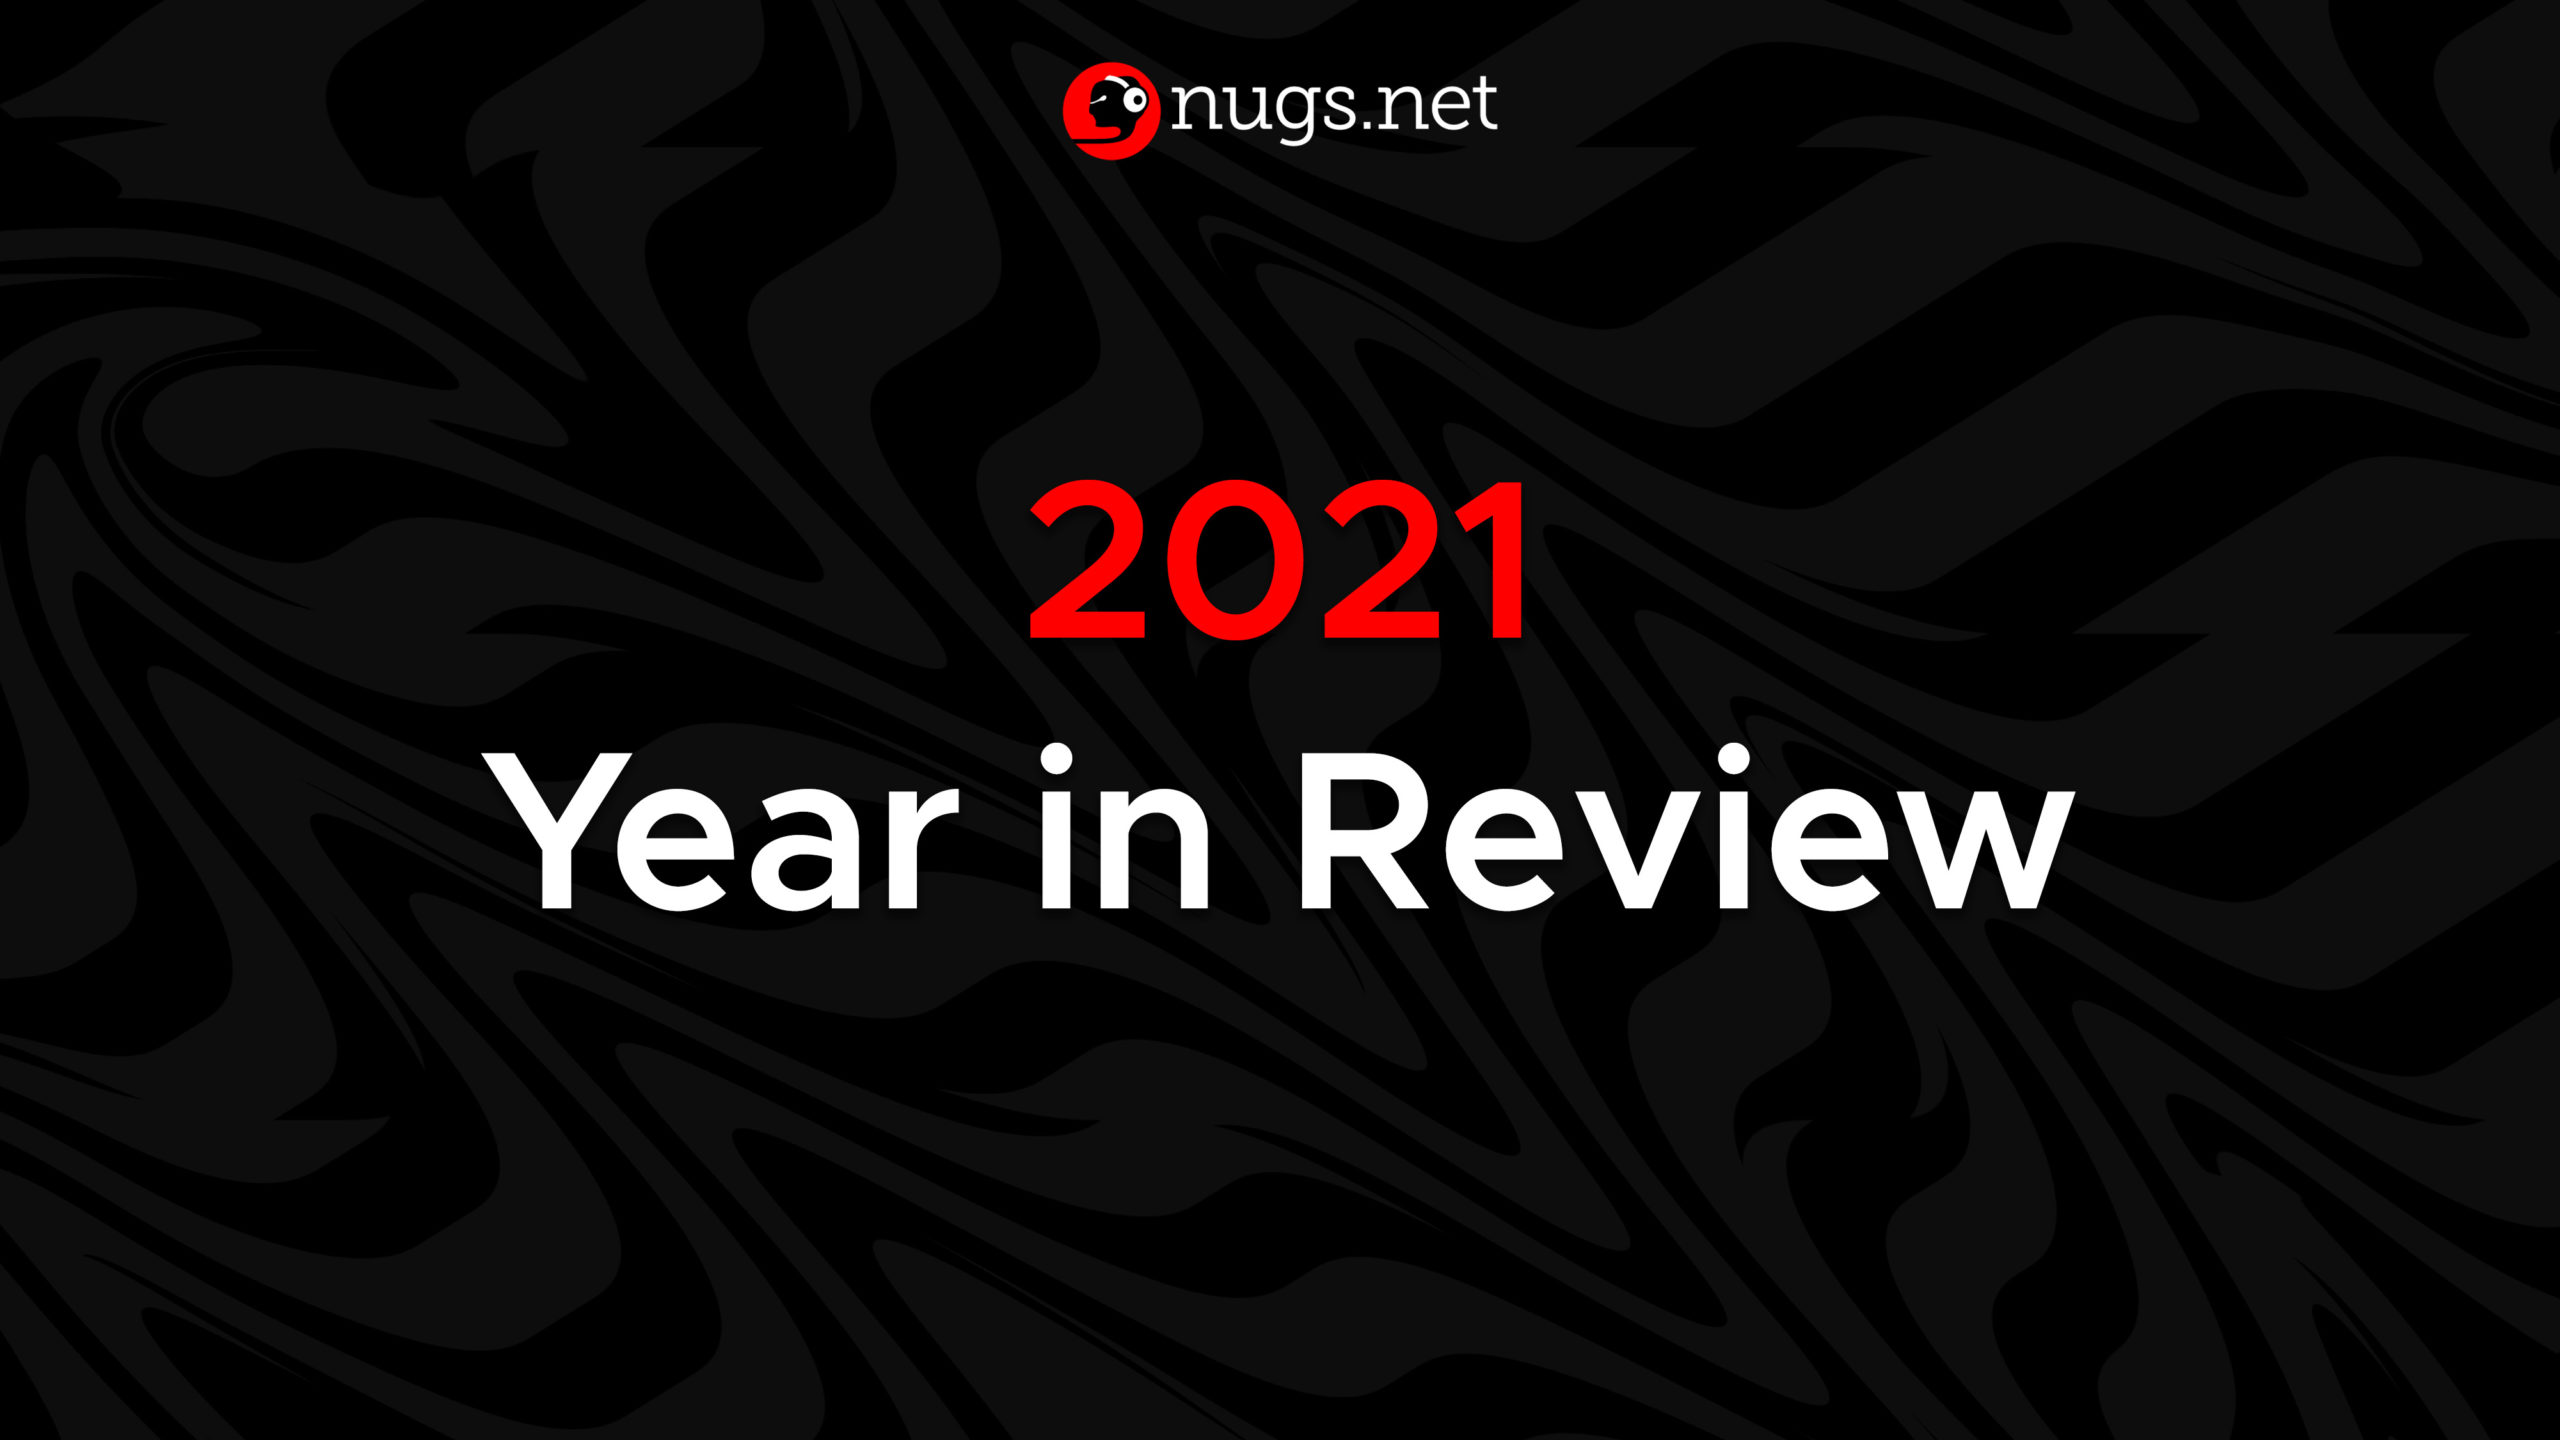 nugs.net 2021 Year in Review